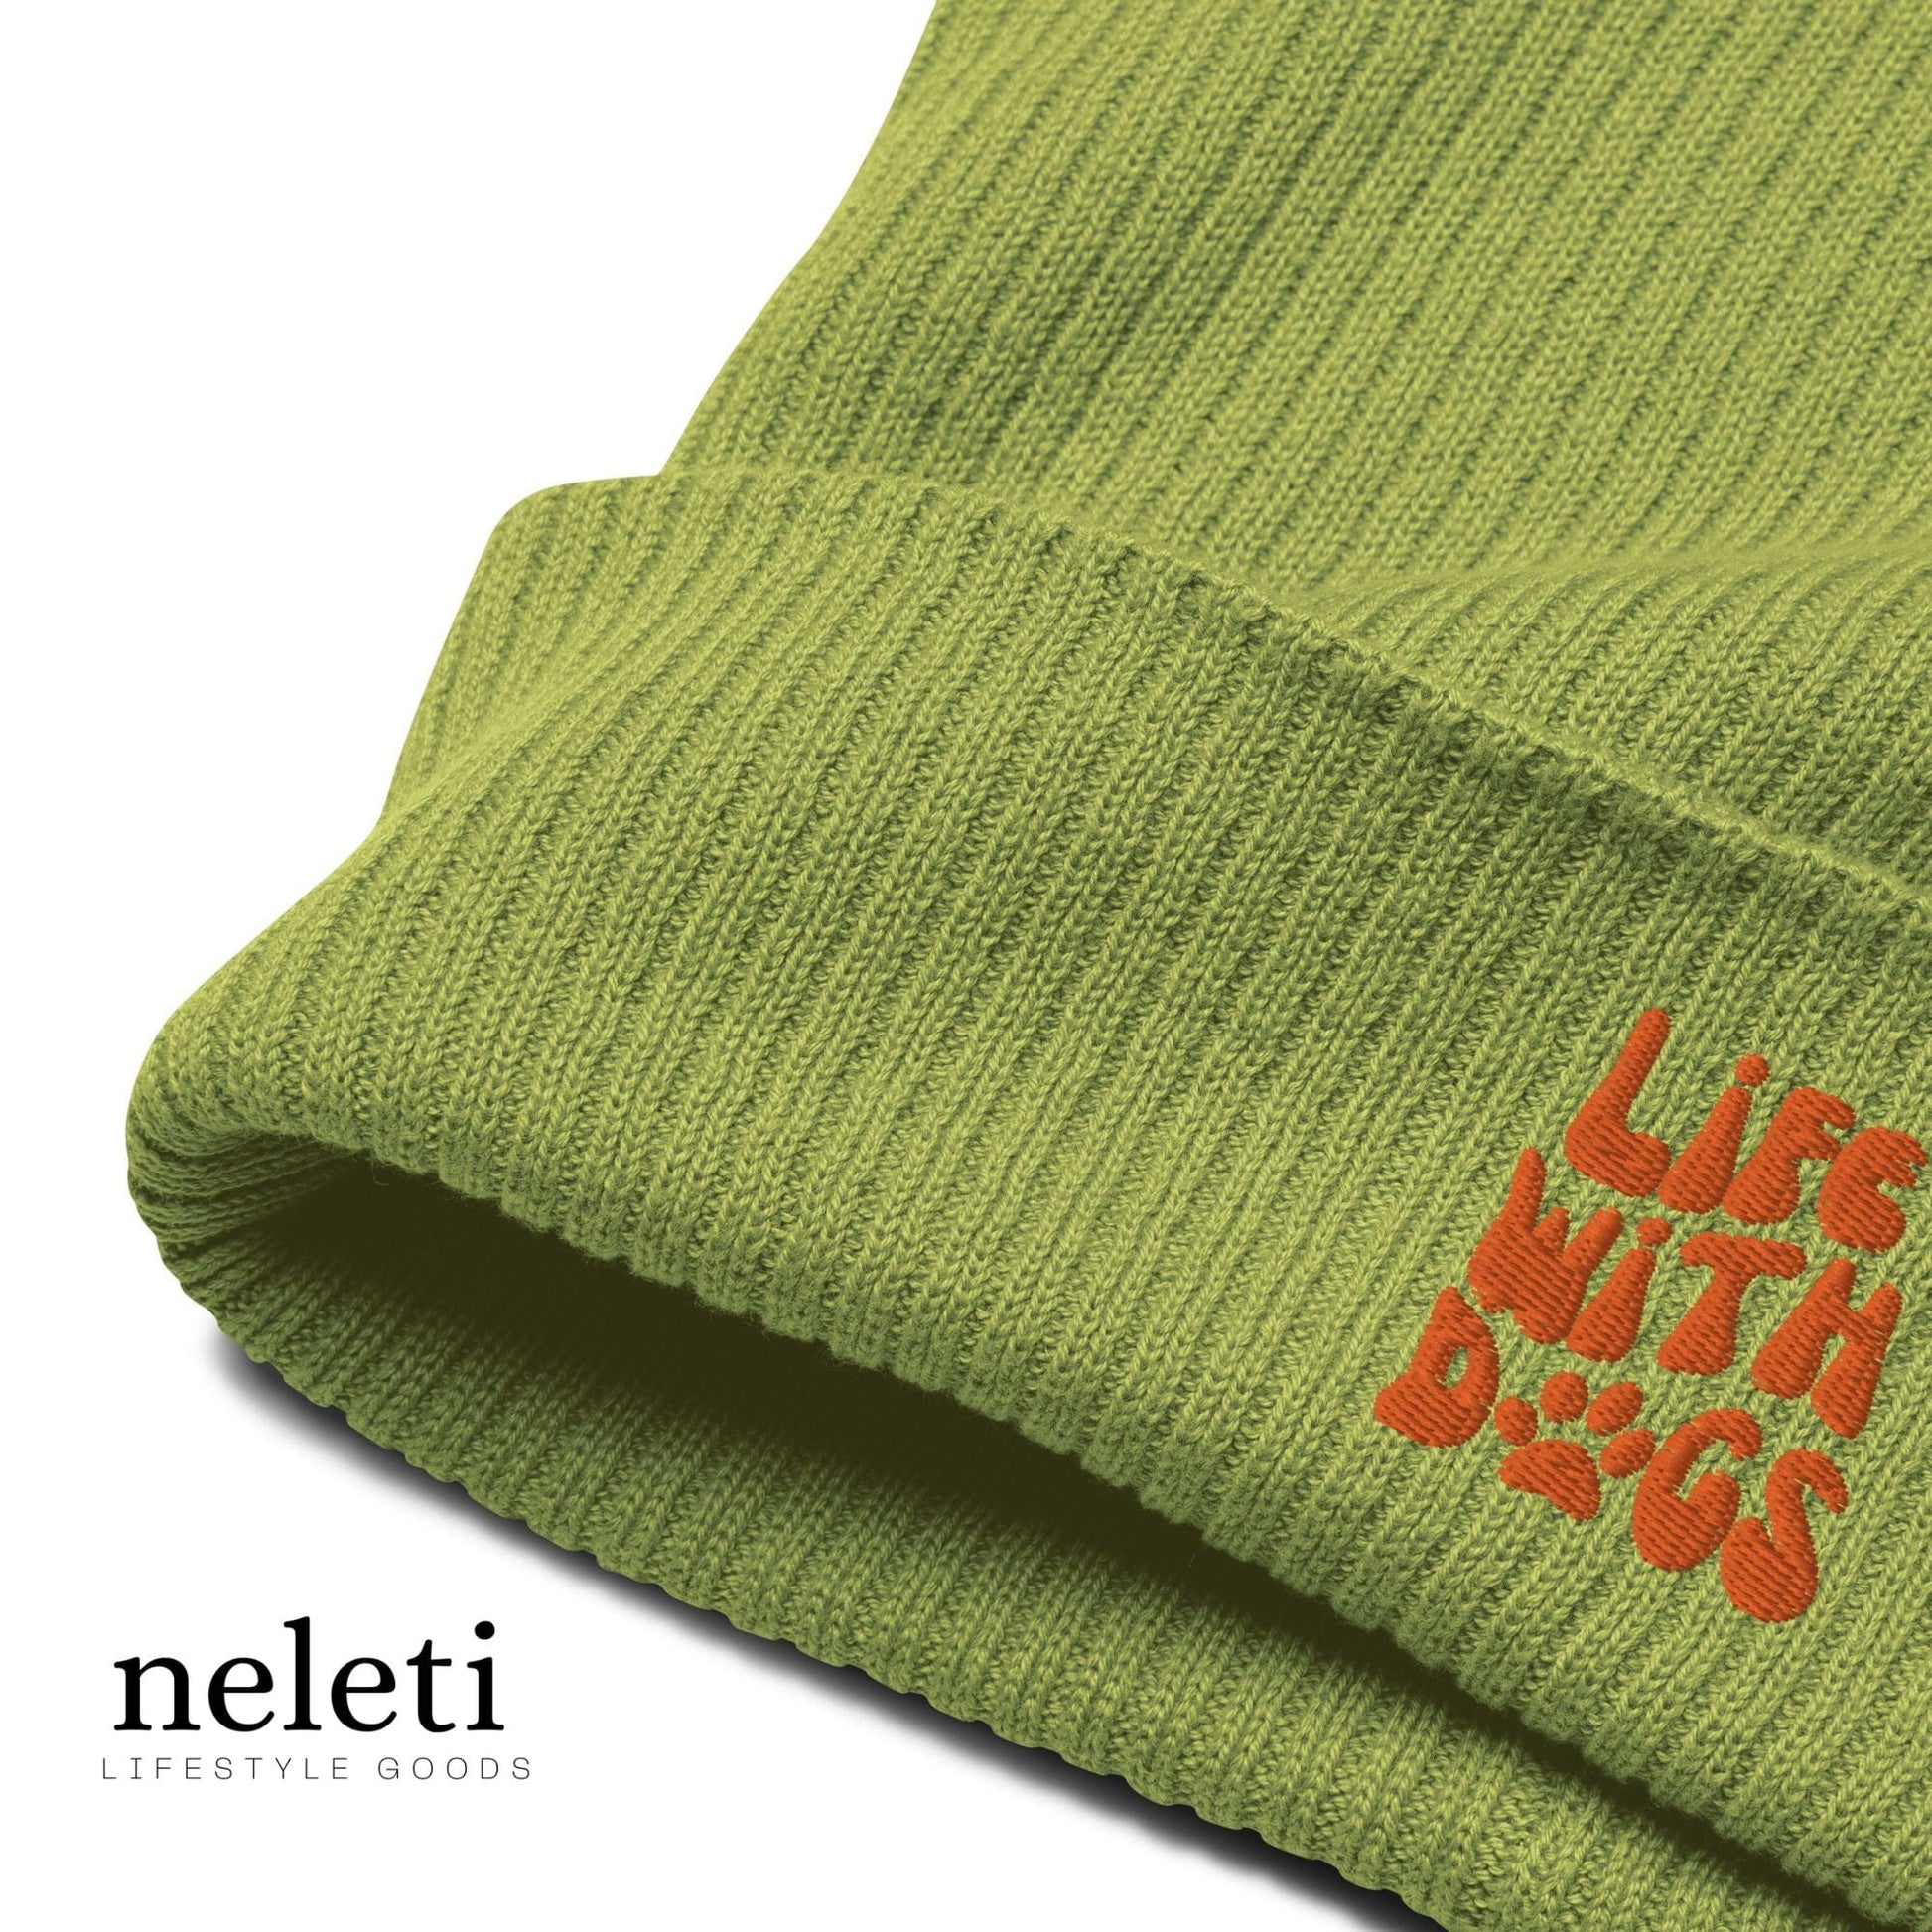 neleti.com-olive-green-beanie-for-dog-lovers